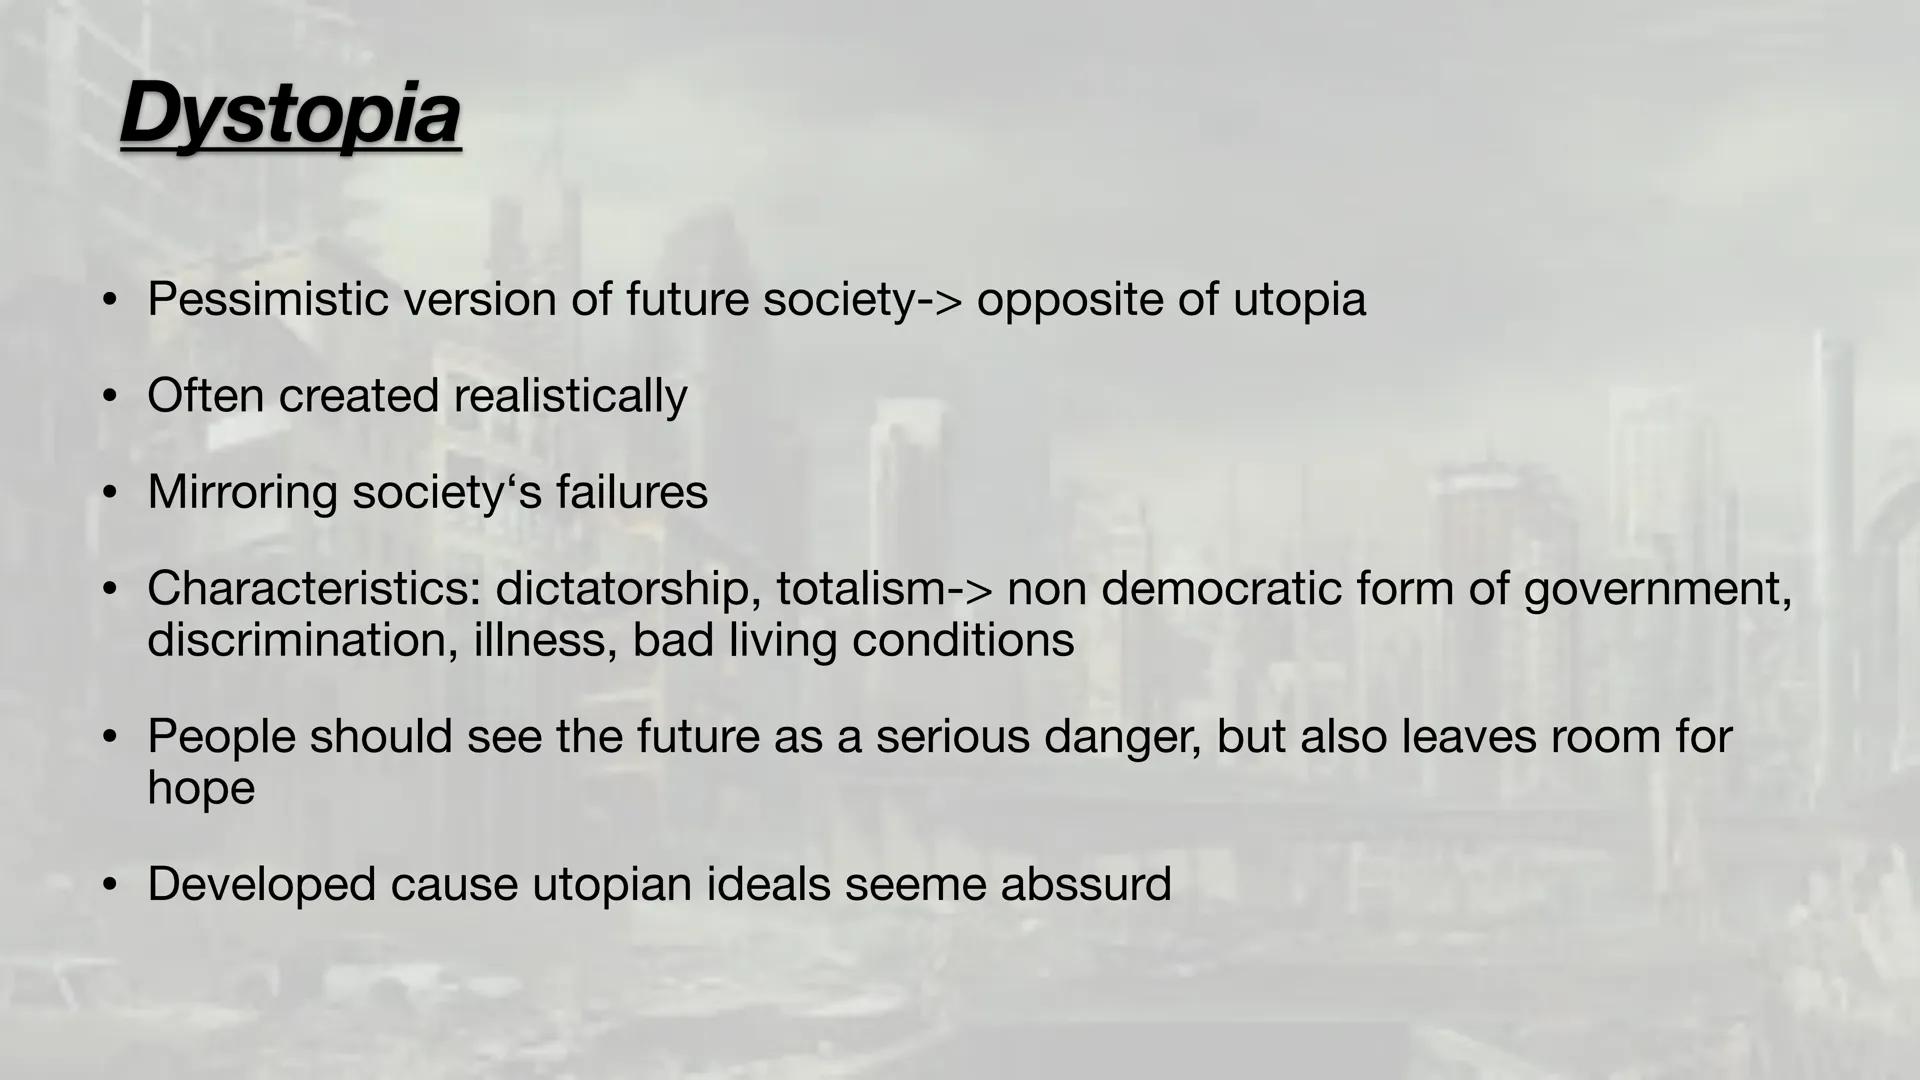 Utopia & Dystopia Content
1. Definition/ characteristics of dystopia & utopia
2. Common aspects
3. Hunger games: Plot summary, dystopian/ ut